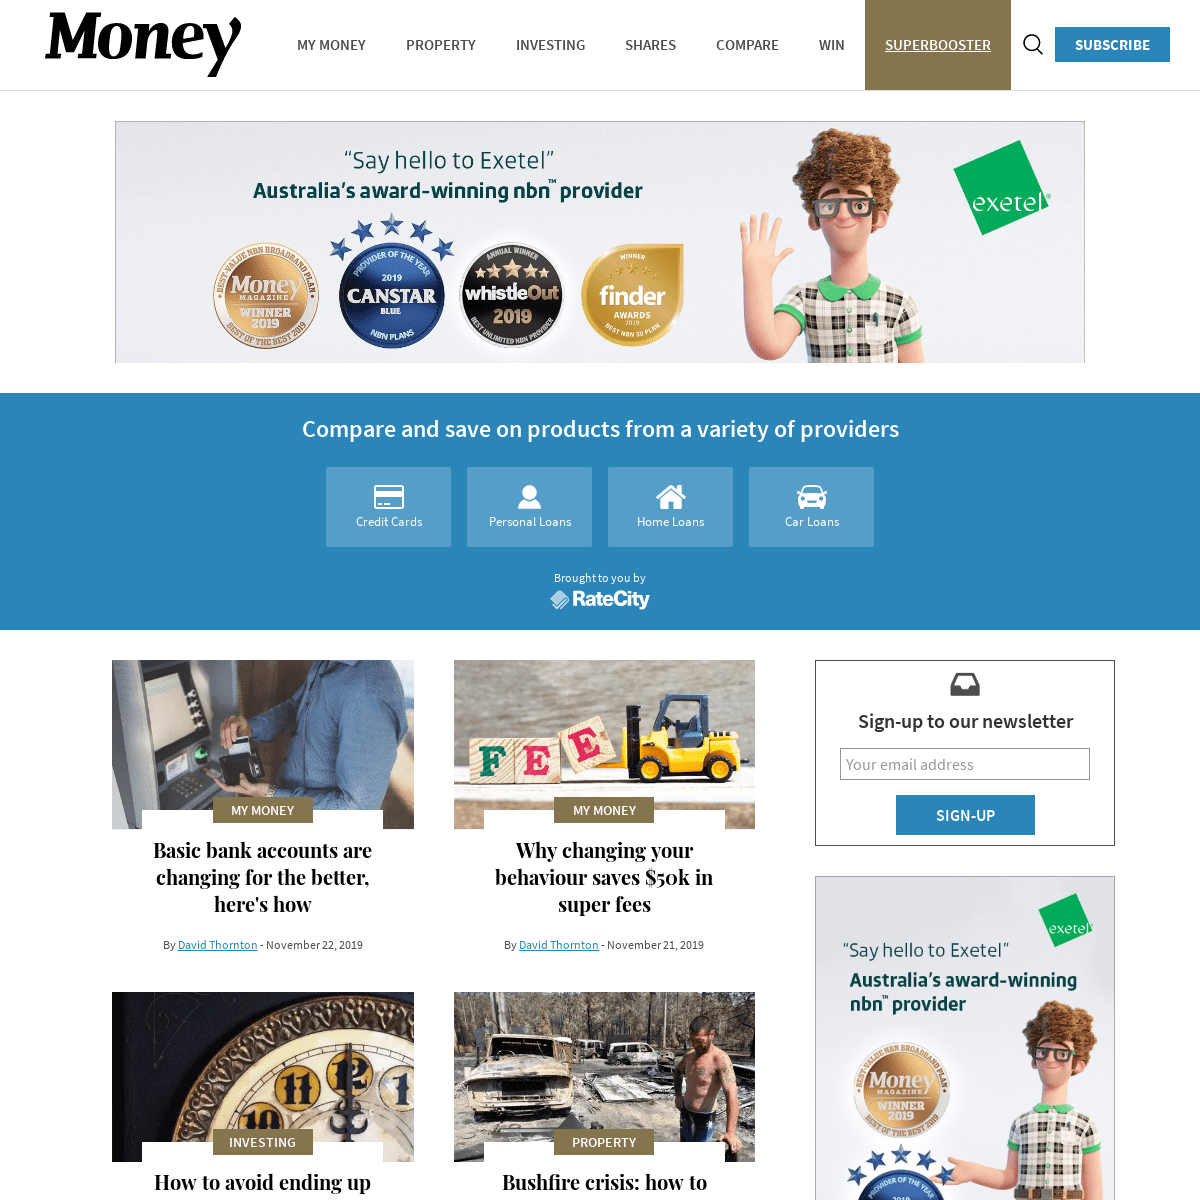 A complete backup of moneymag.com.au